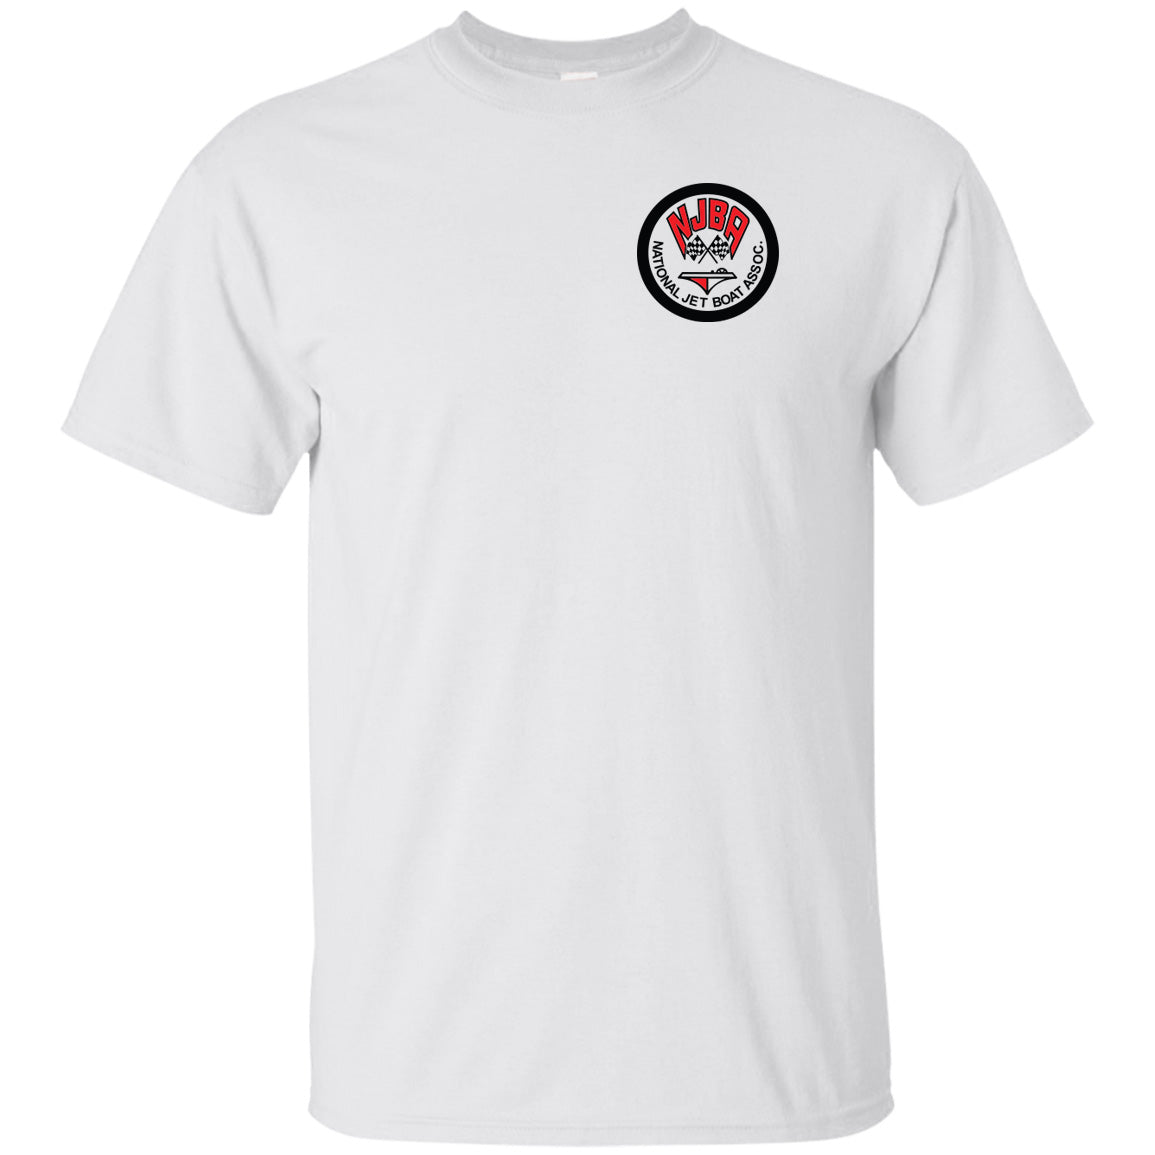 Official NJBA White T-Shirt